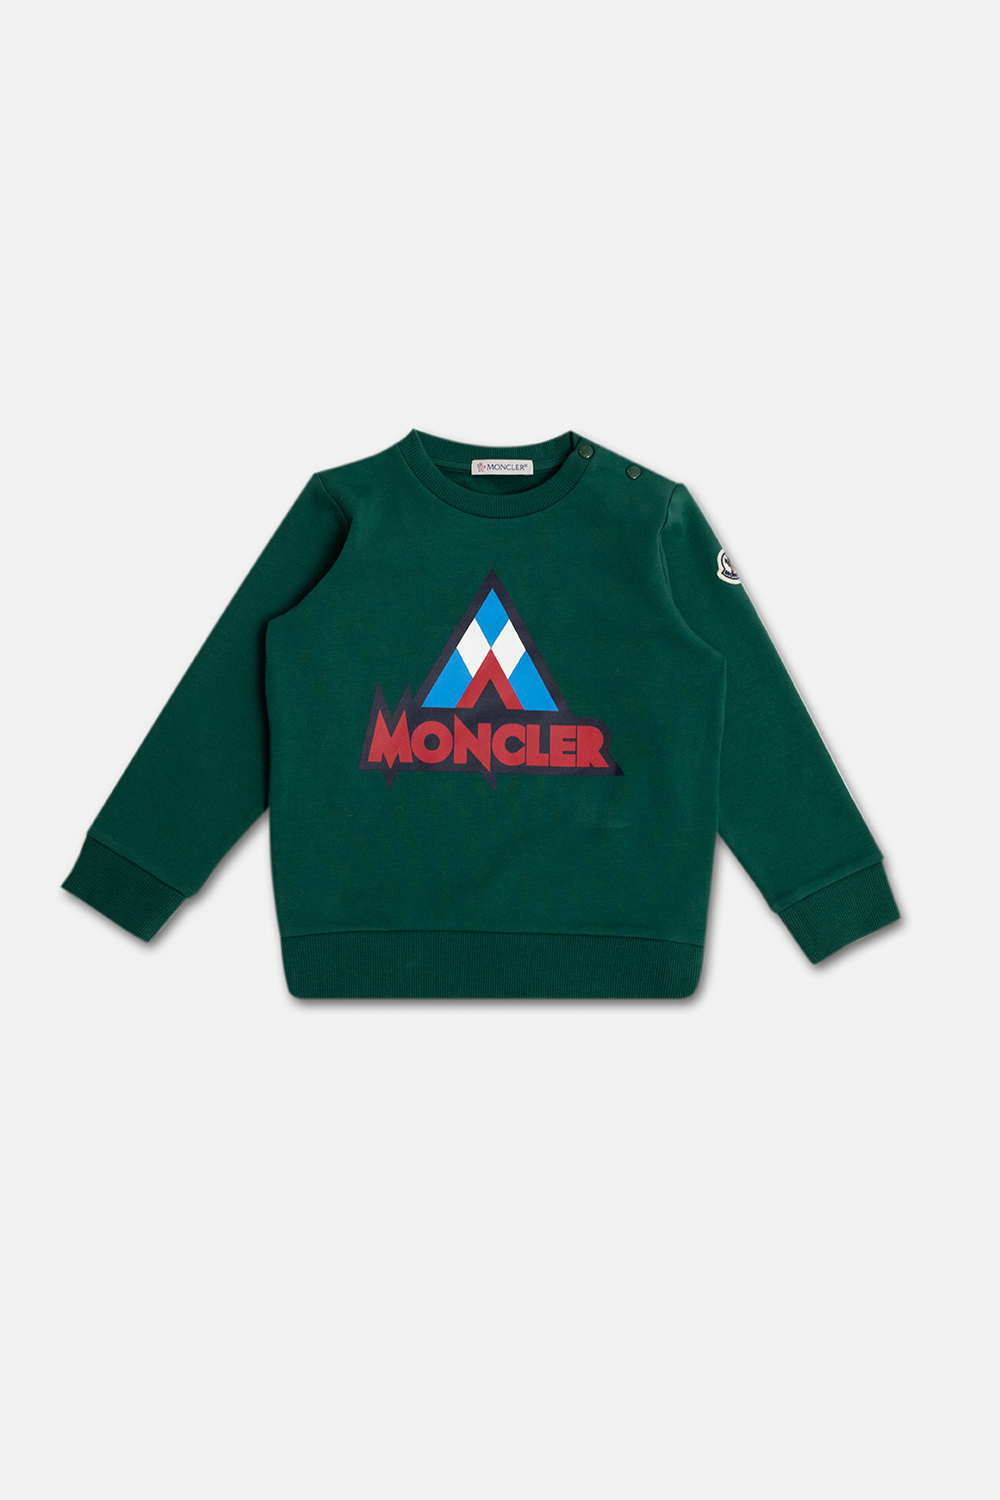 print T - Tommy Hilfiger thermal long sleeve crew neck sweatshirt Beatnik  in gray - Green glow logo - StclaircomoShops Macao - shirt Blu Moncler  Enfant